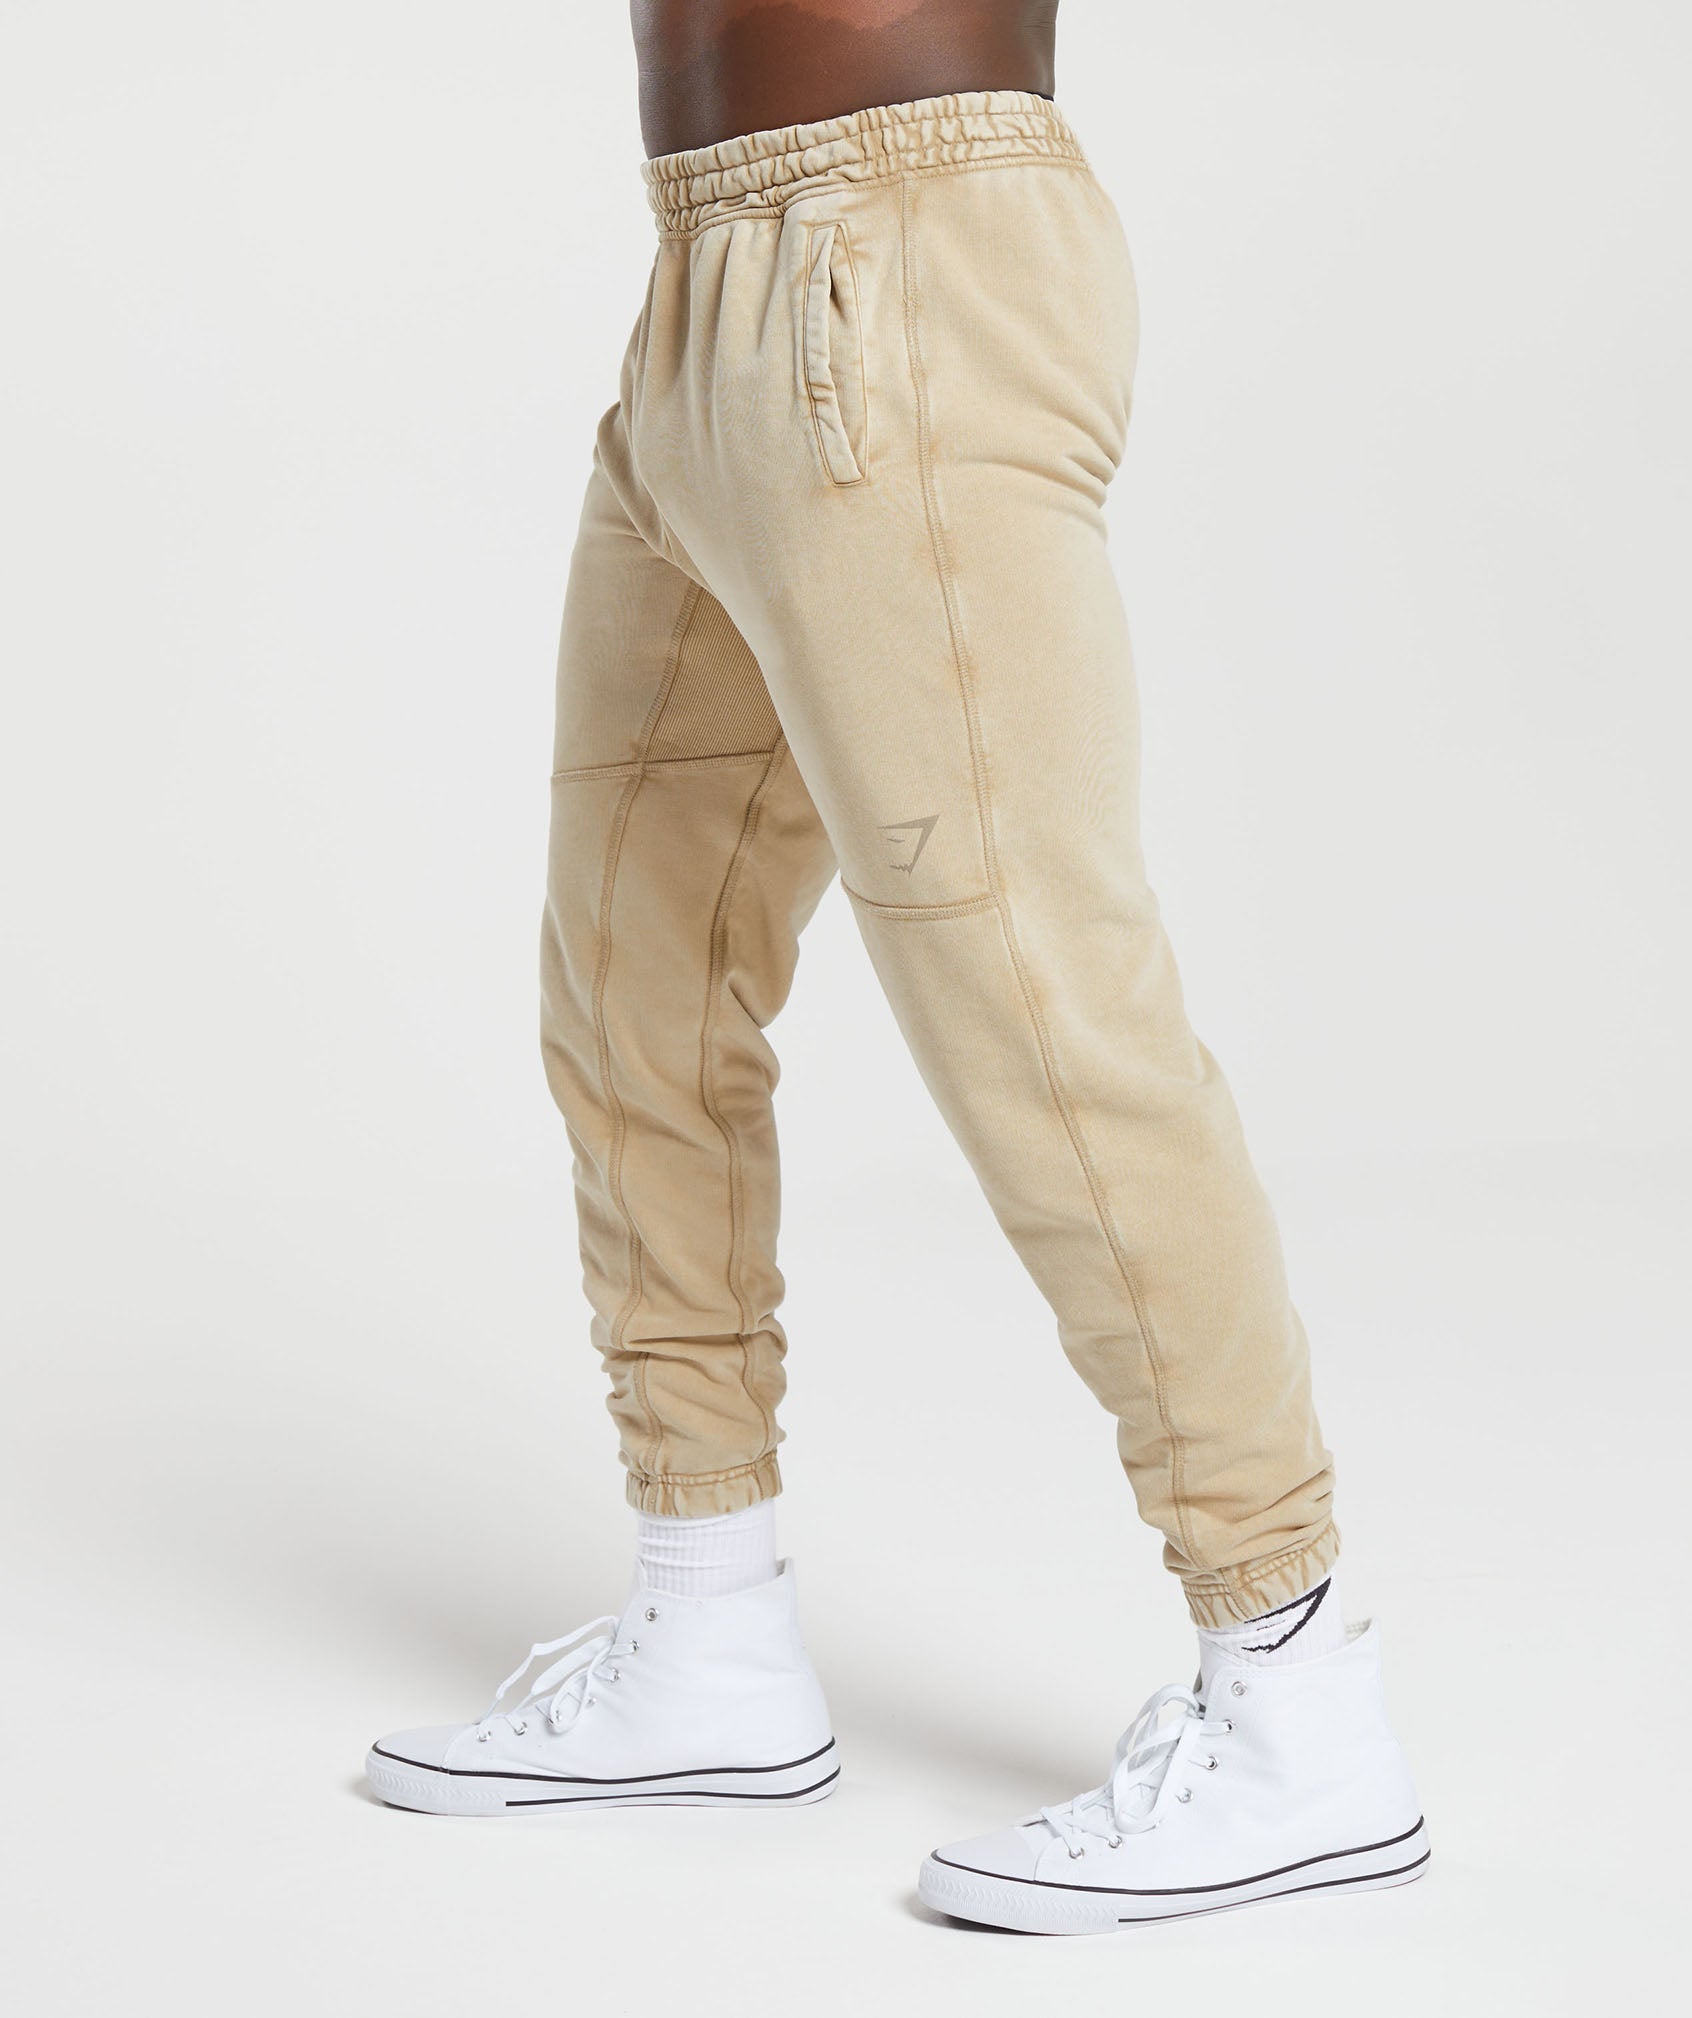 Gymshark beige sweatpants 27” size medium womens